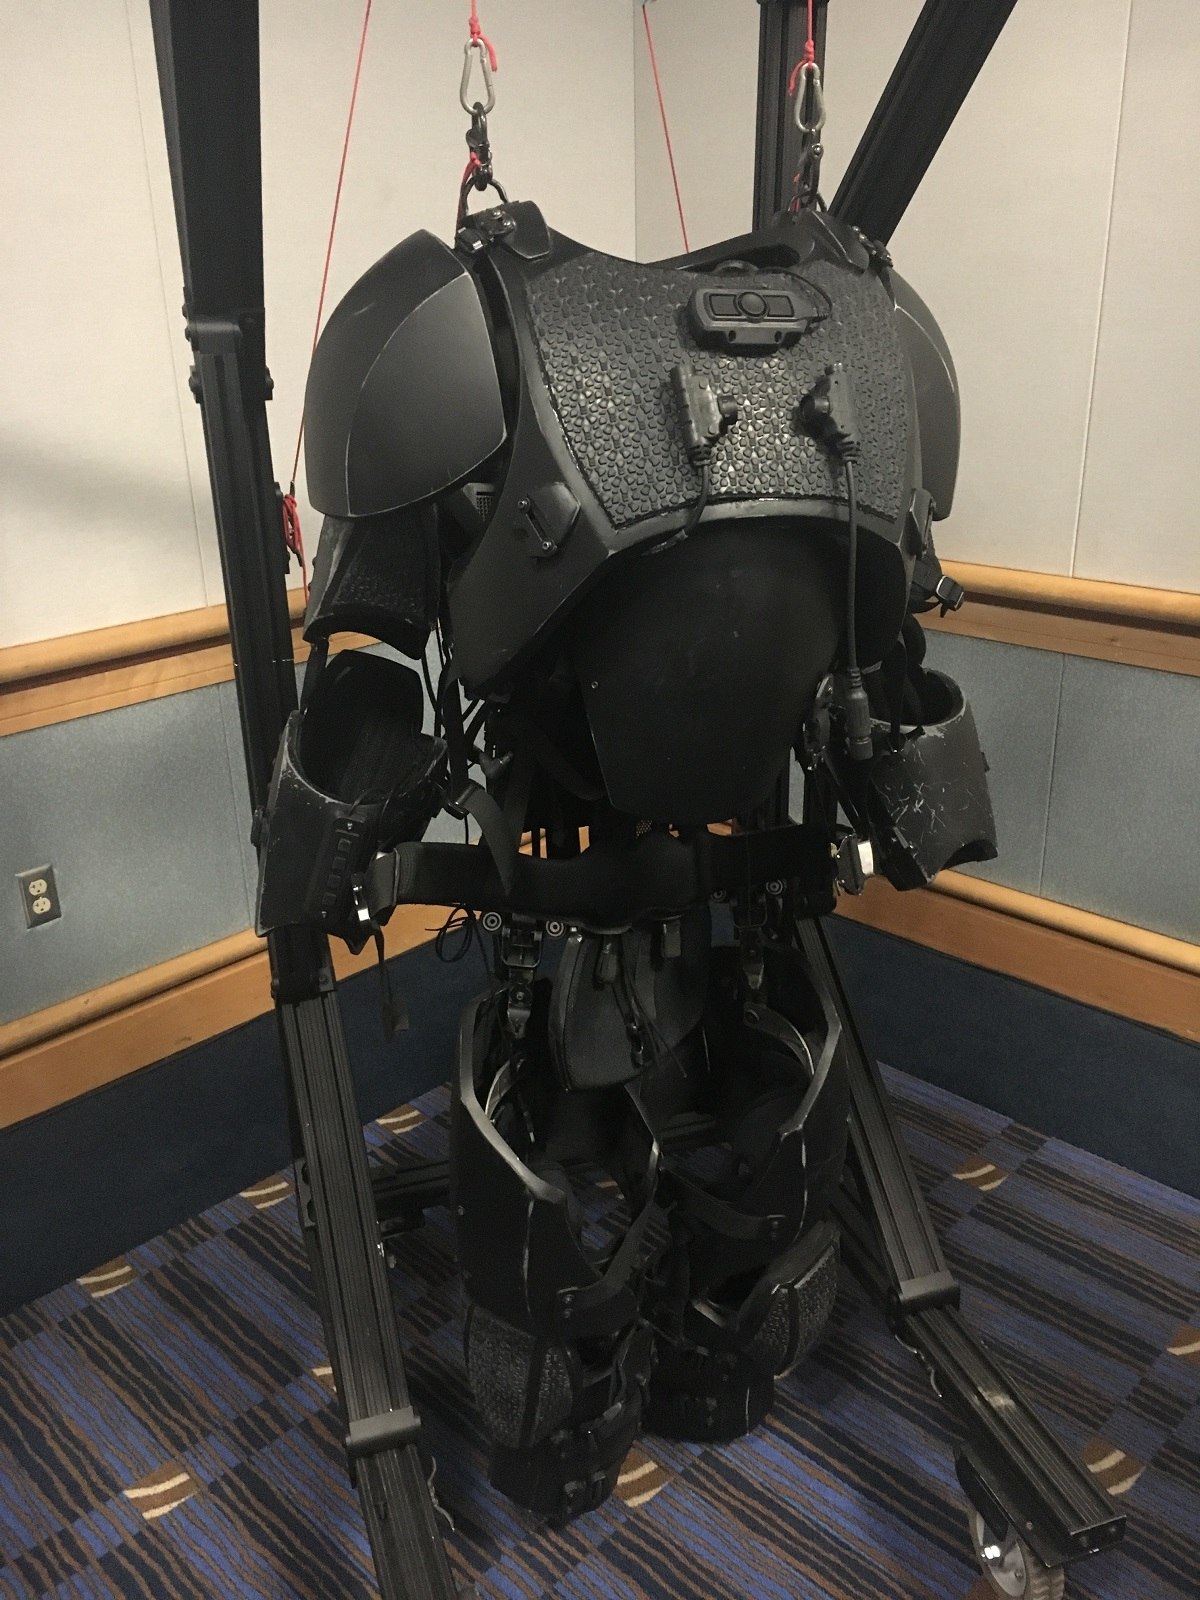 U S Army  TALOS Exoskeleton  to Begin Manned Testing in 